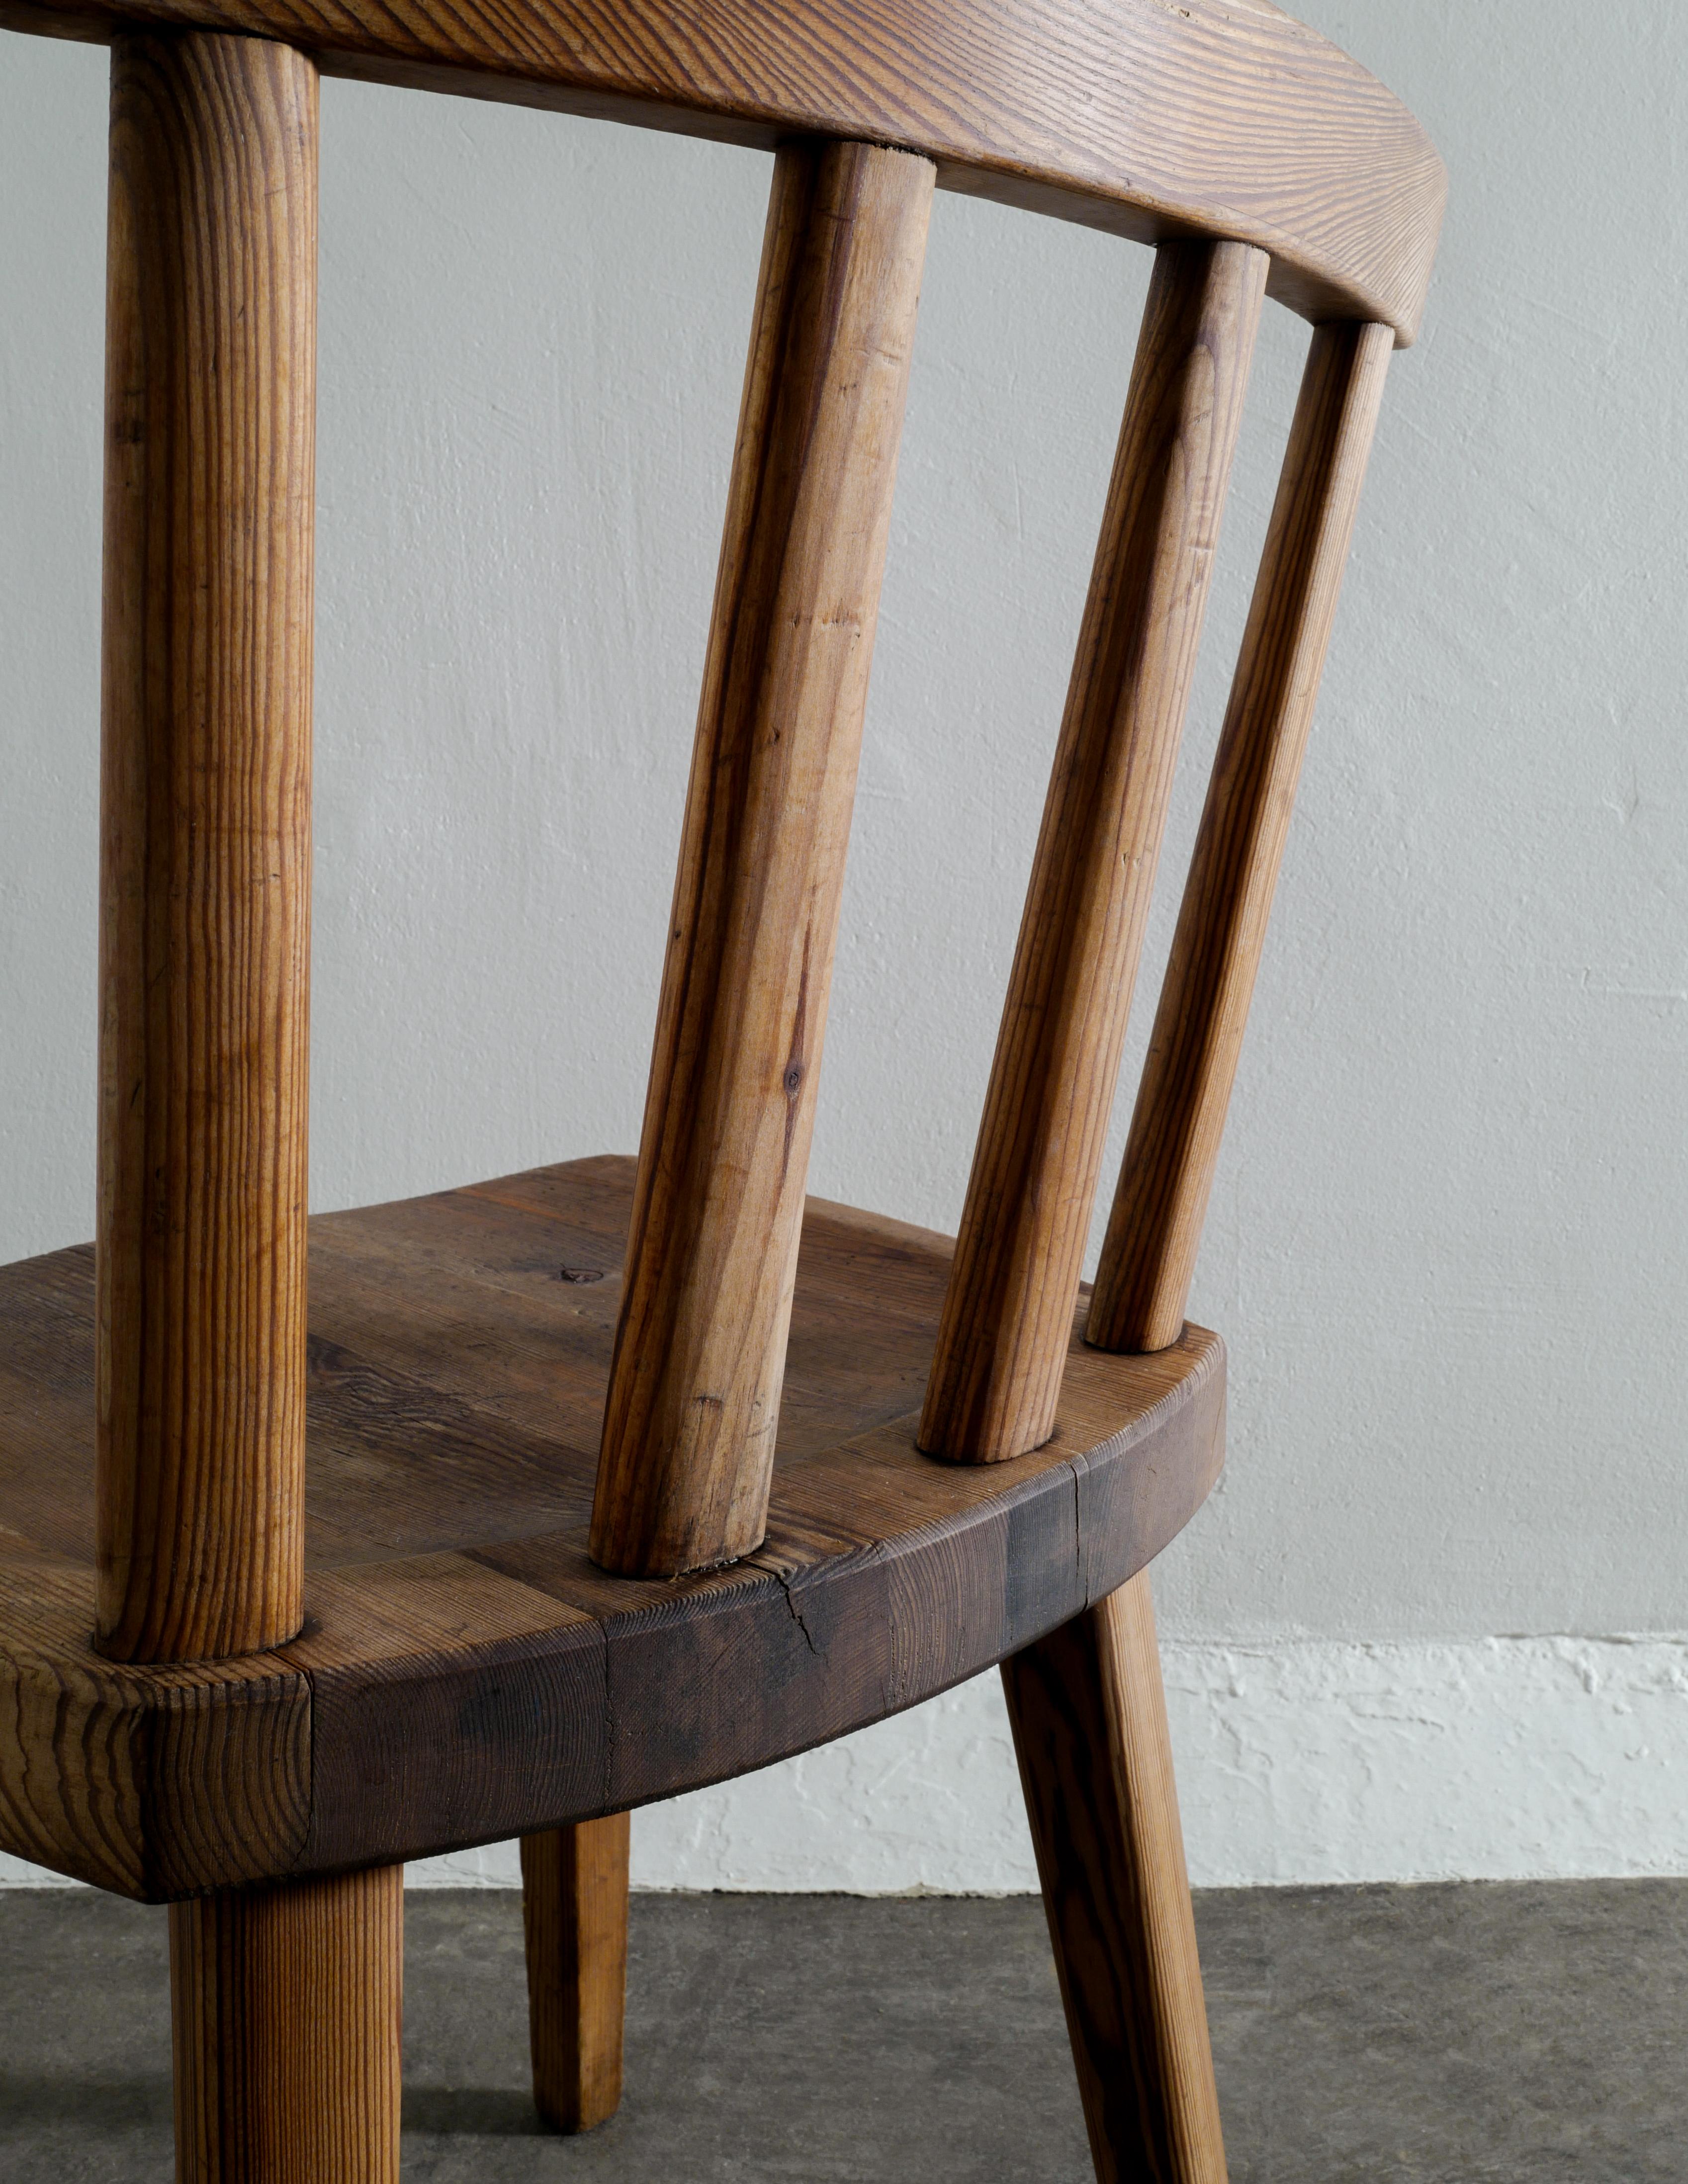 Pine Axel Einar Hjorth Table & Chair Produced by Nordiska Kompaniet, Sweden, 1930s